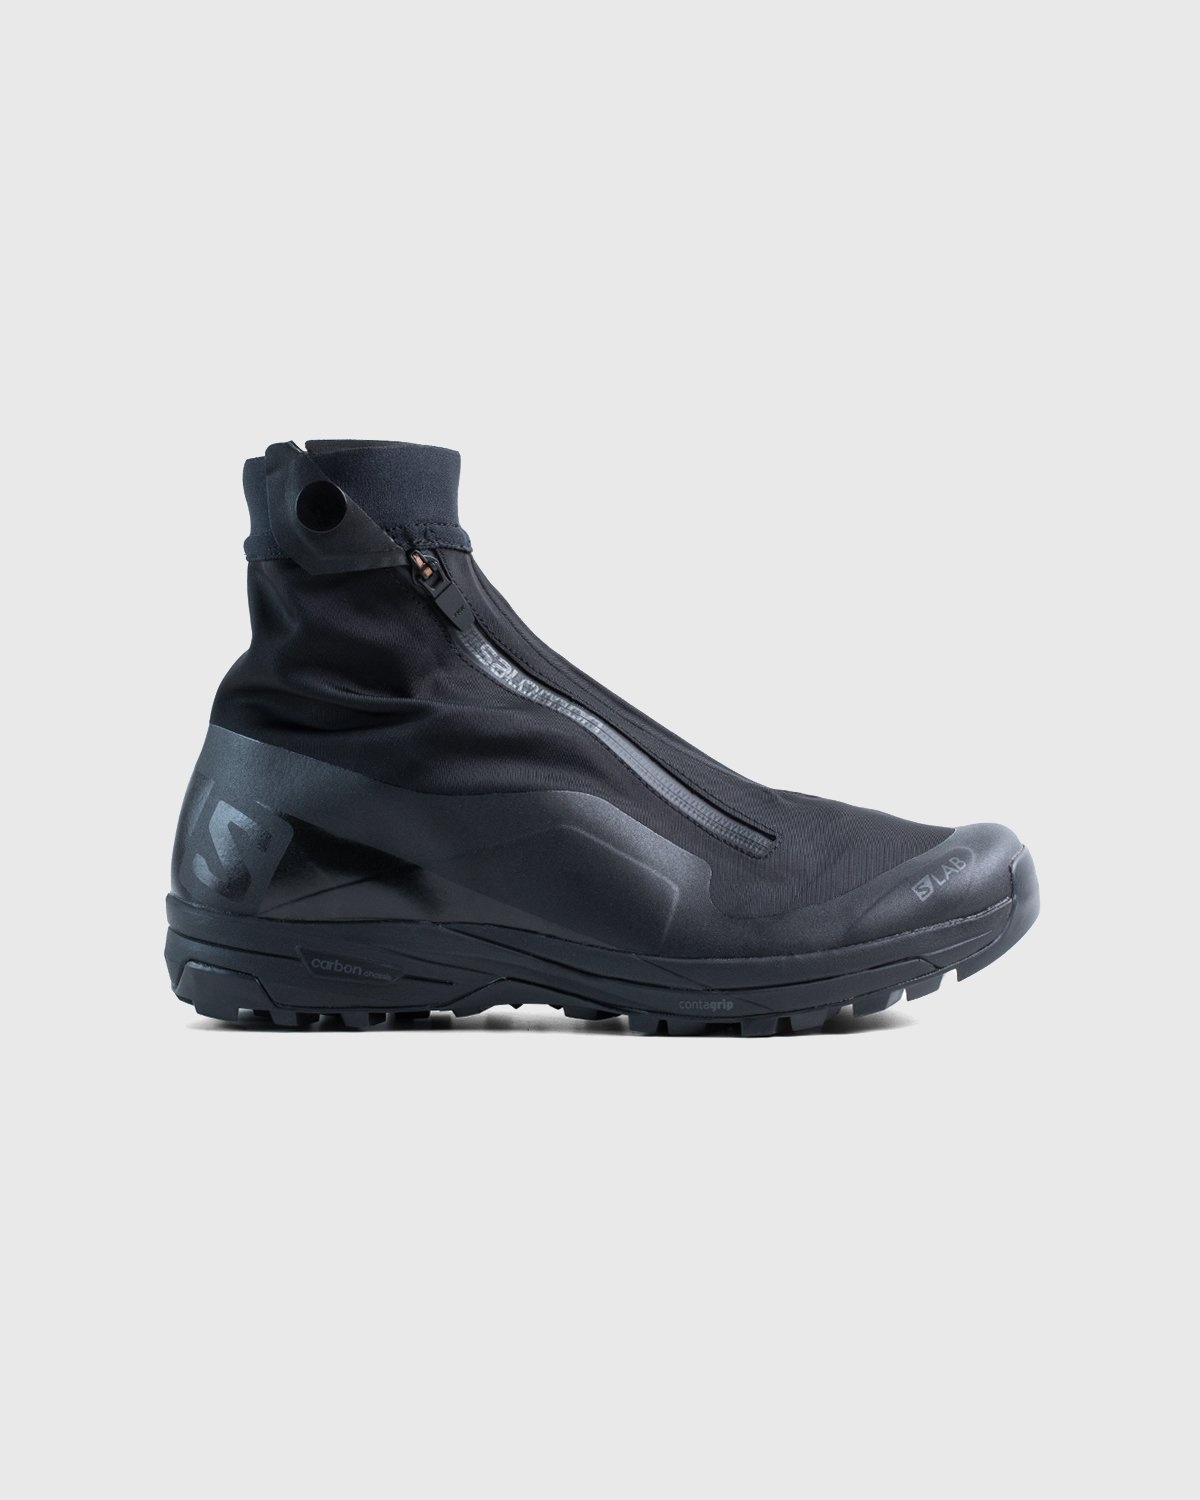 Salomon – S/Lab XA-Alpine 2 Limited Edition Black - Hiking Boots - Black - Image 1